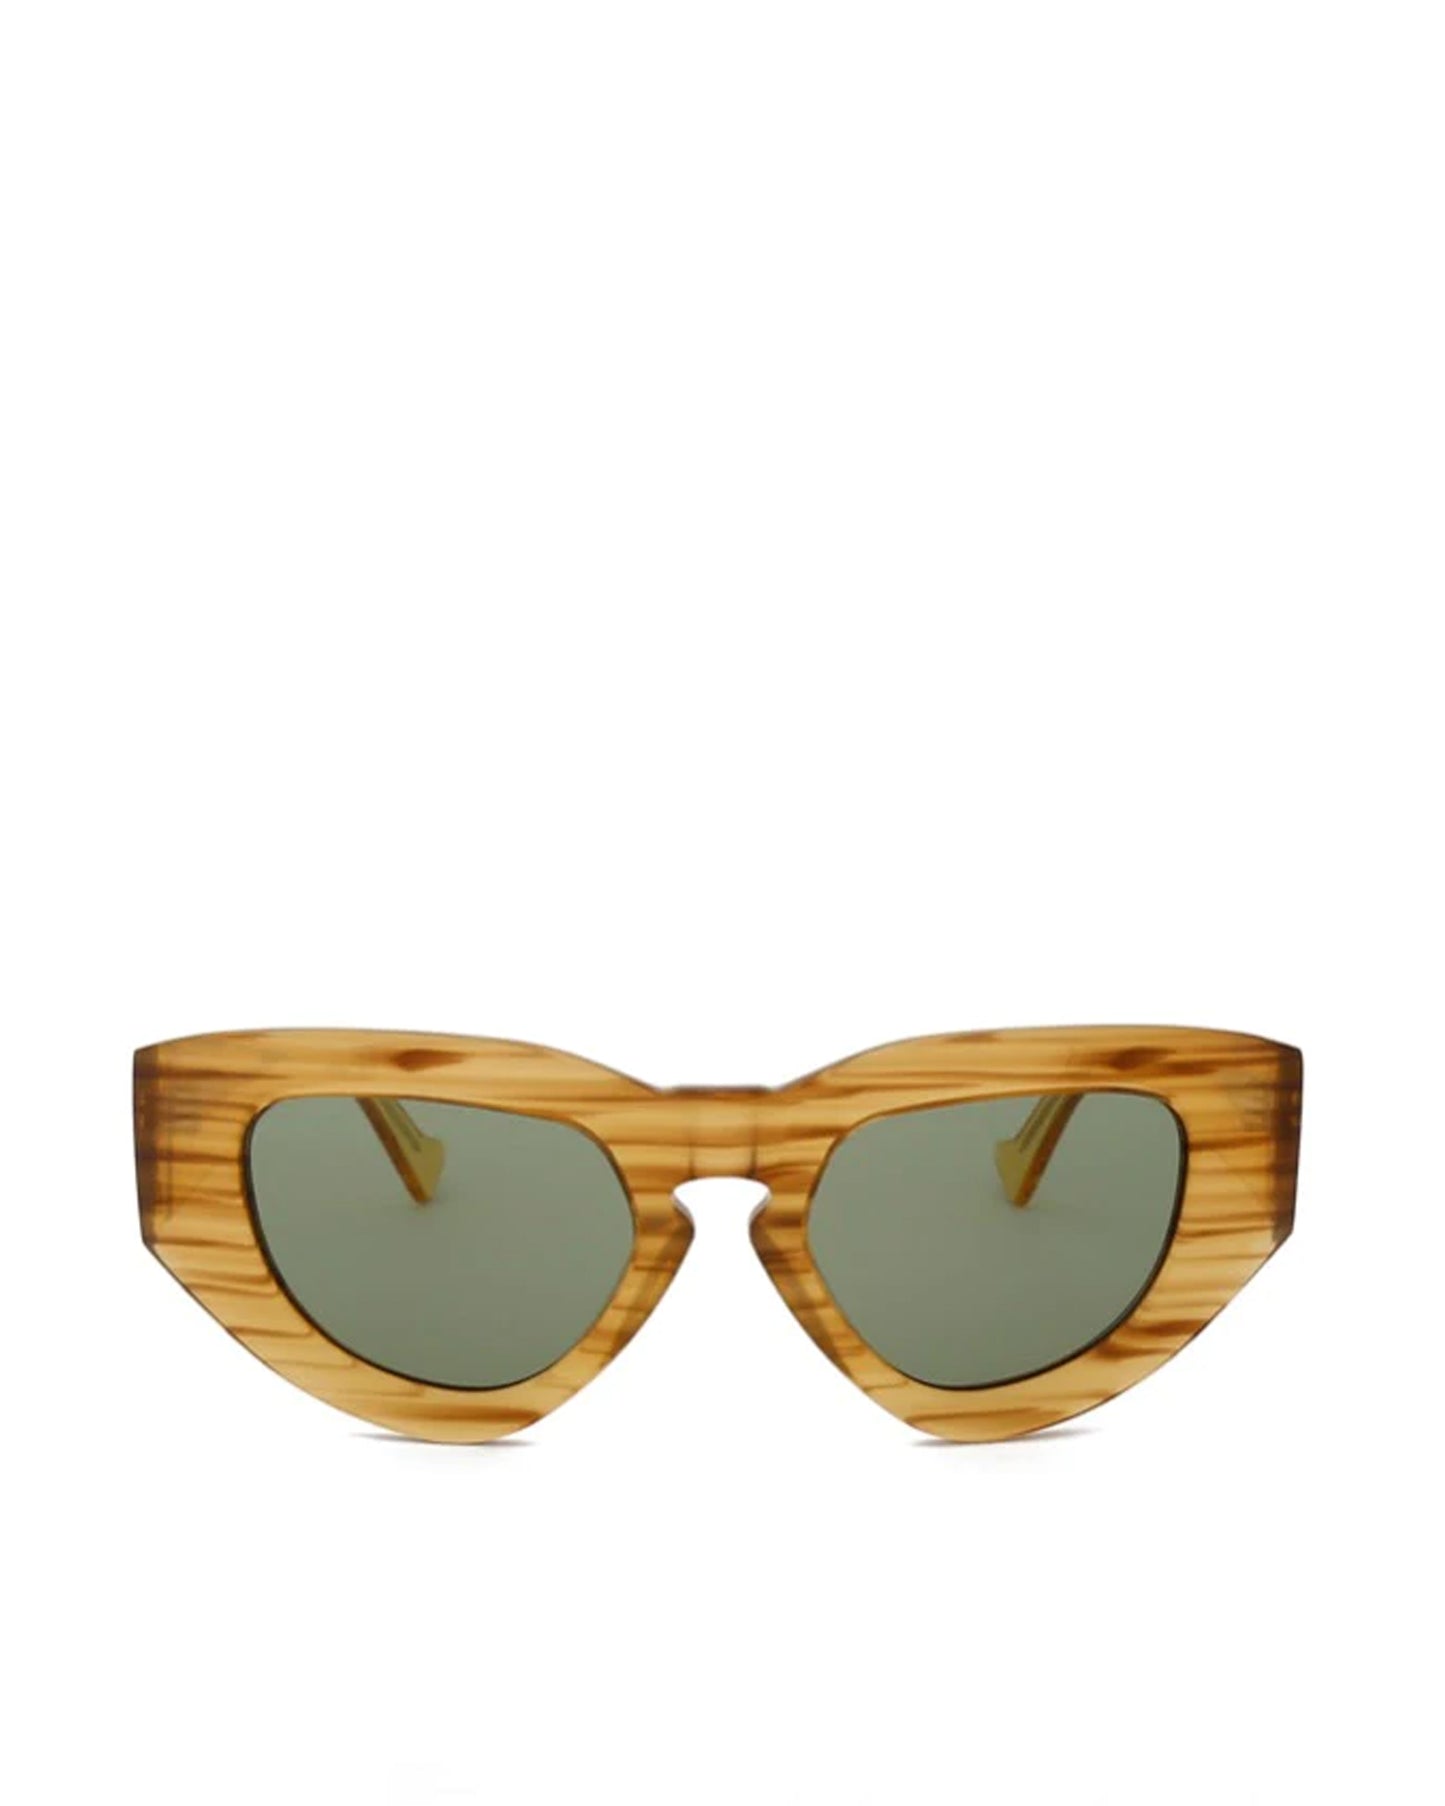 GREY ANT Catskill Sunglasses in Gold Tortoise